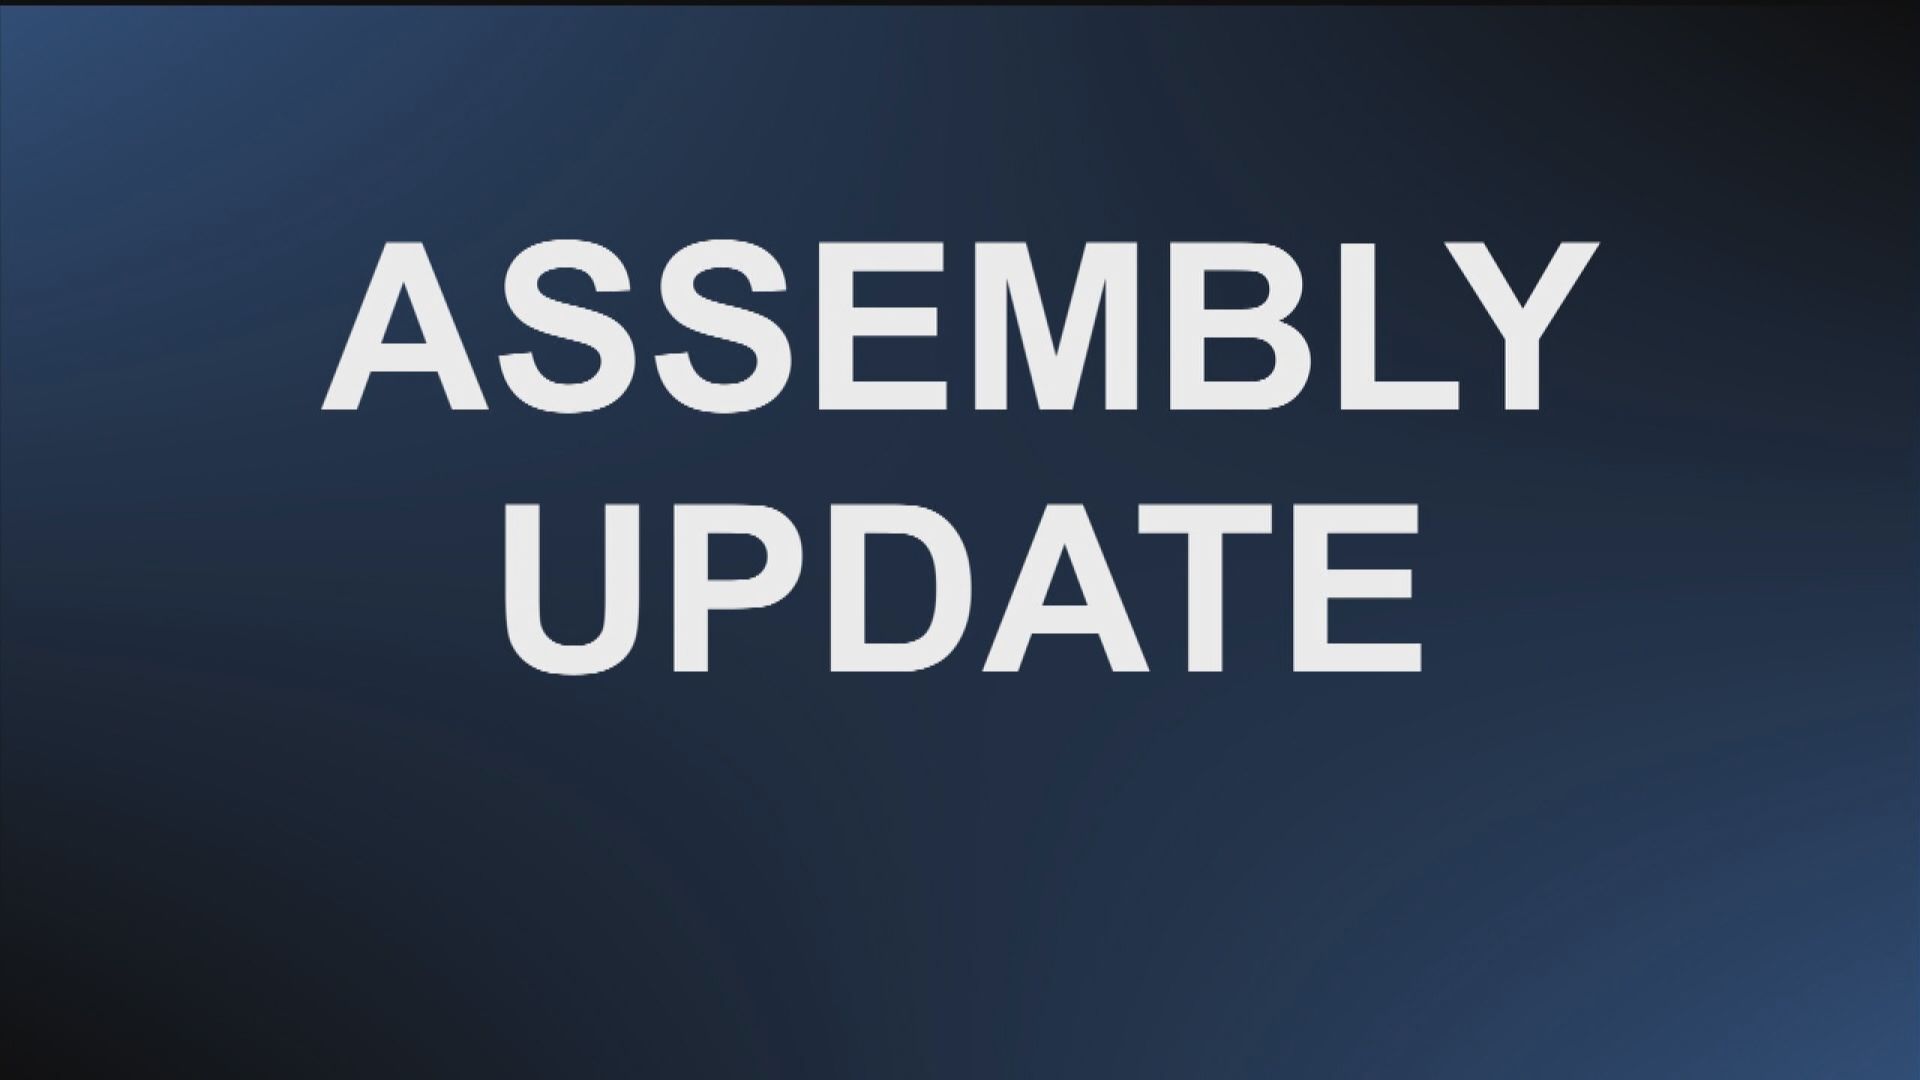 Legislative Update on Issues Facing Disabilities Community